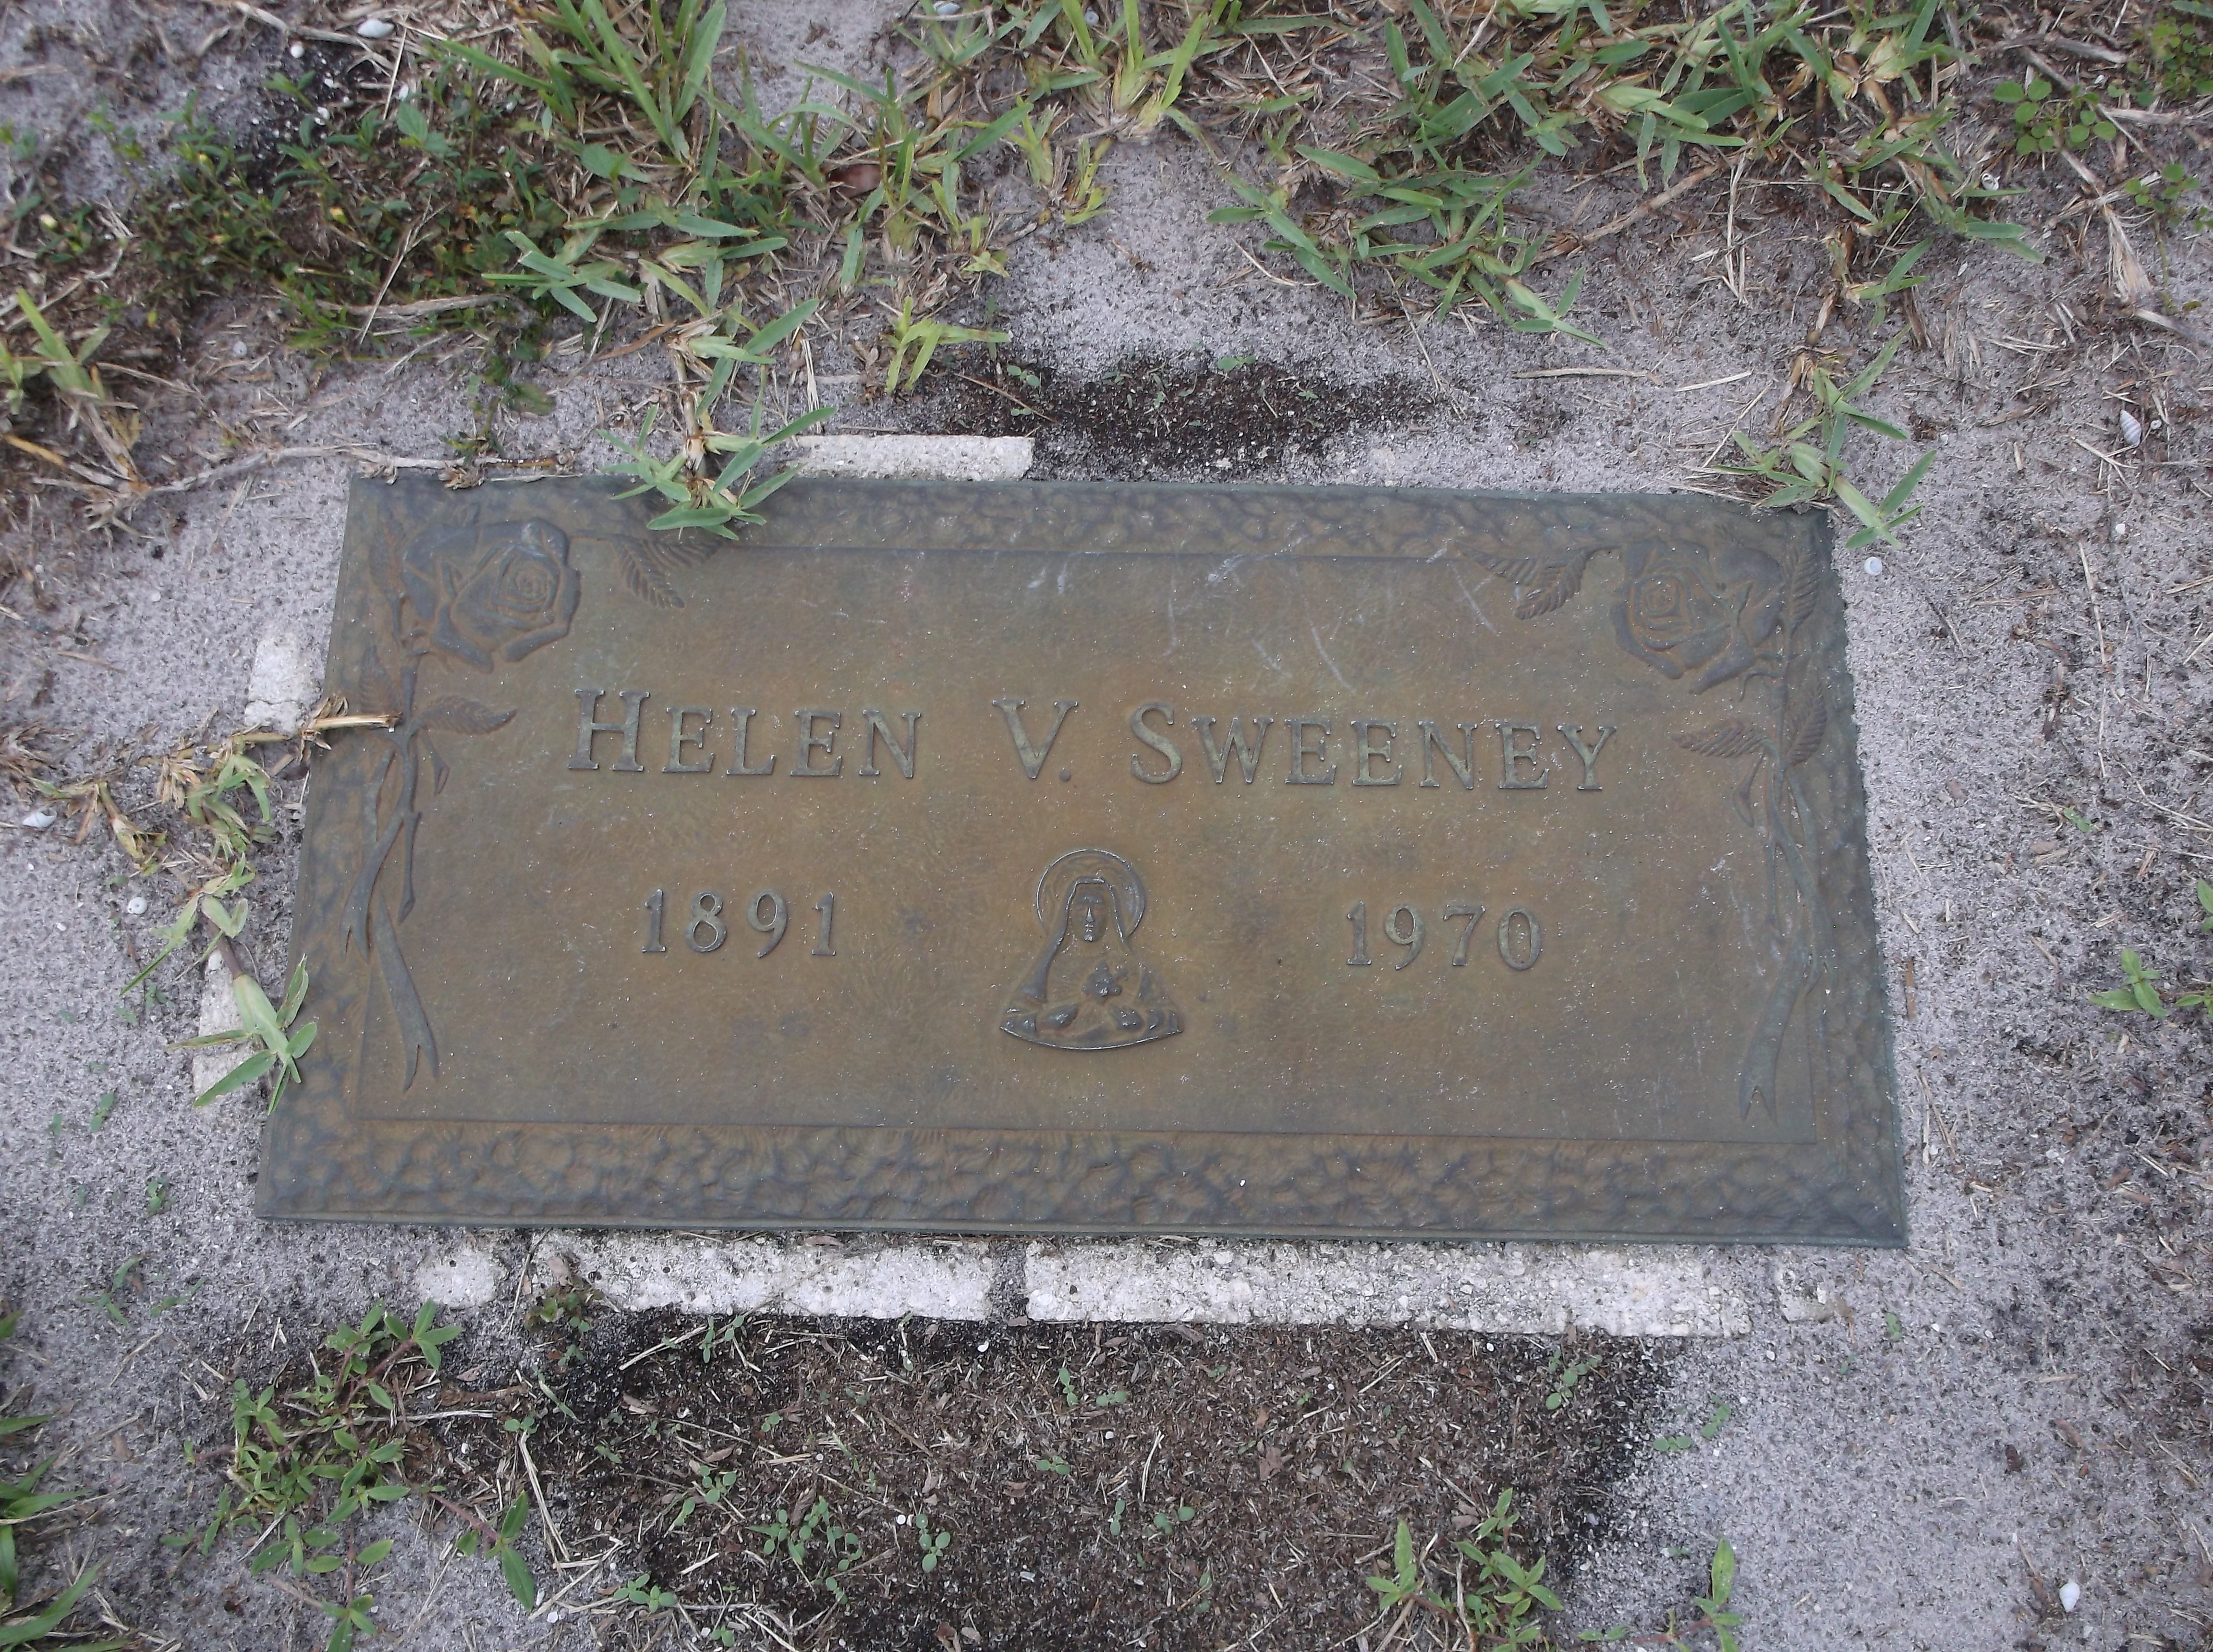 Helen V Sweeney